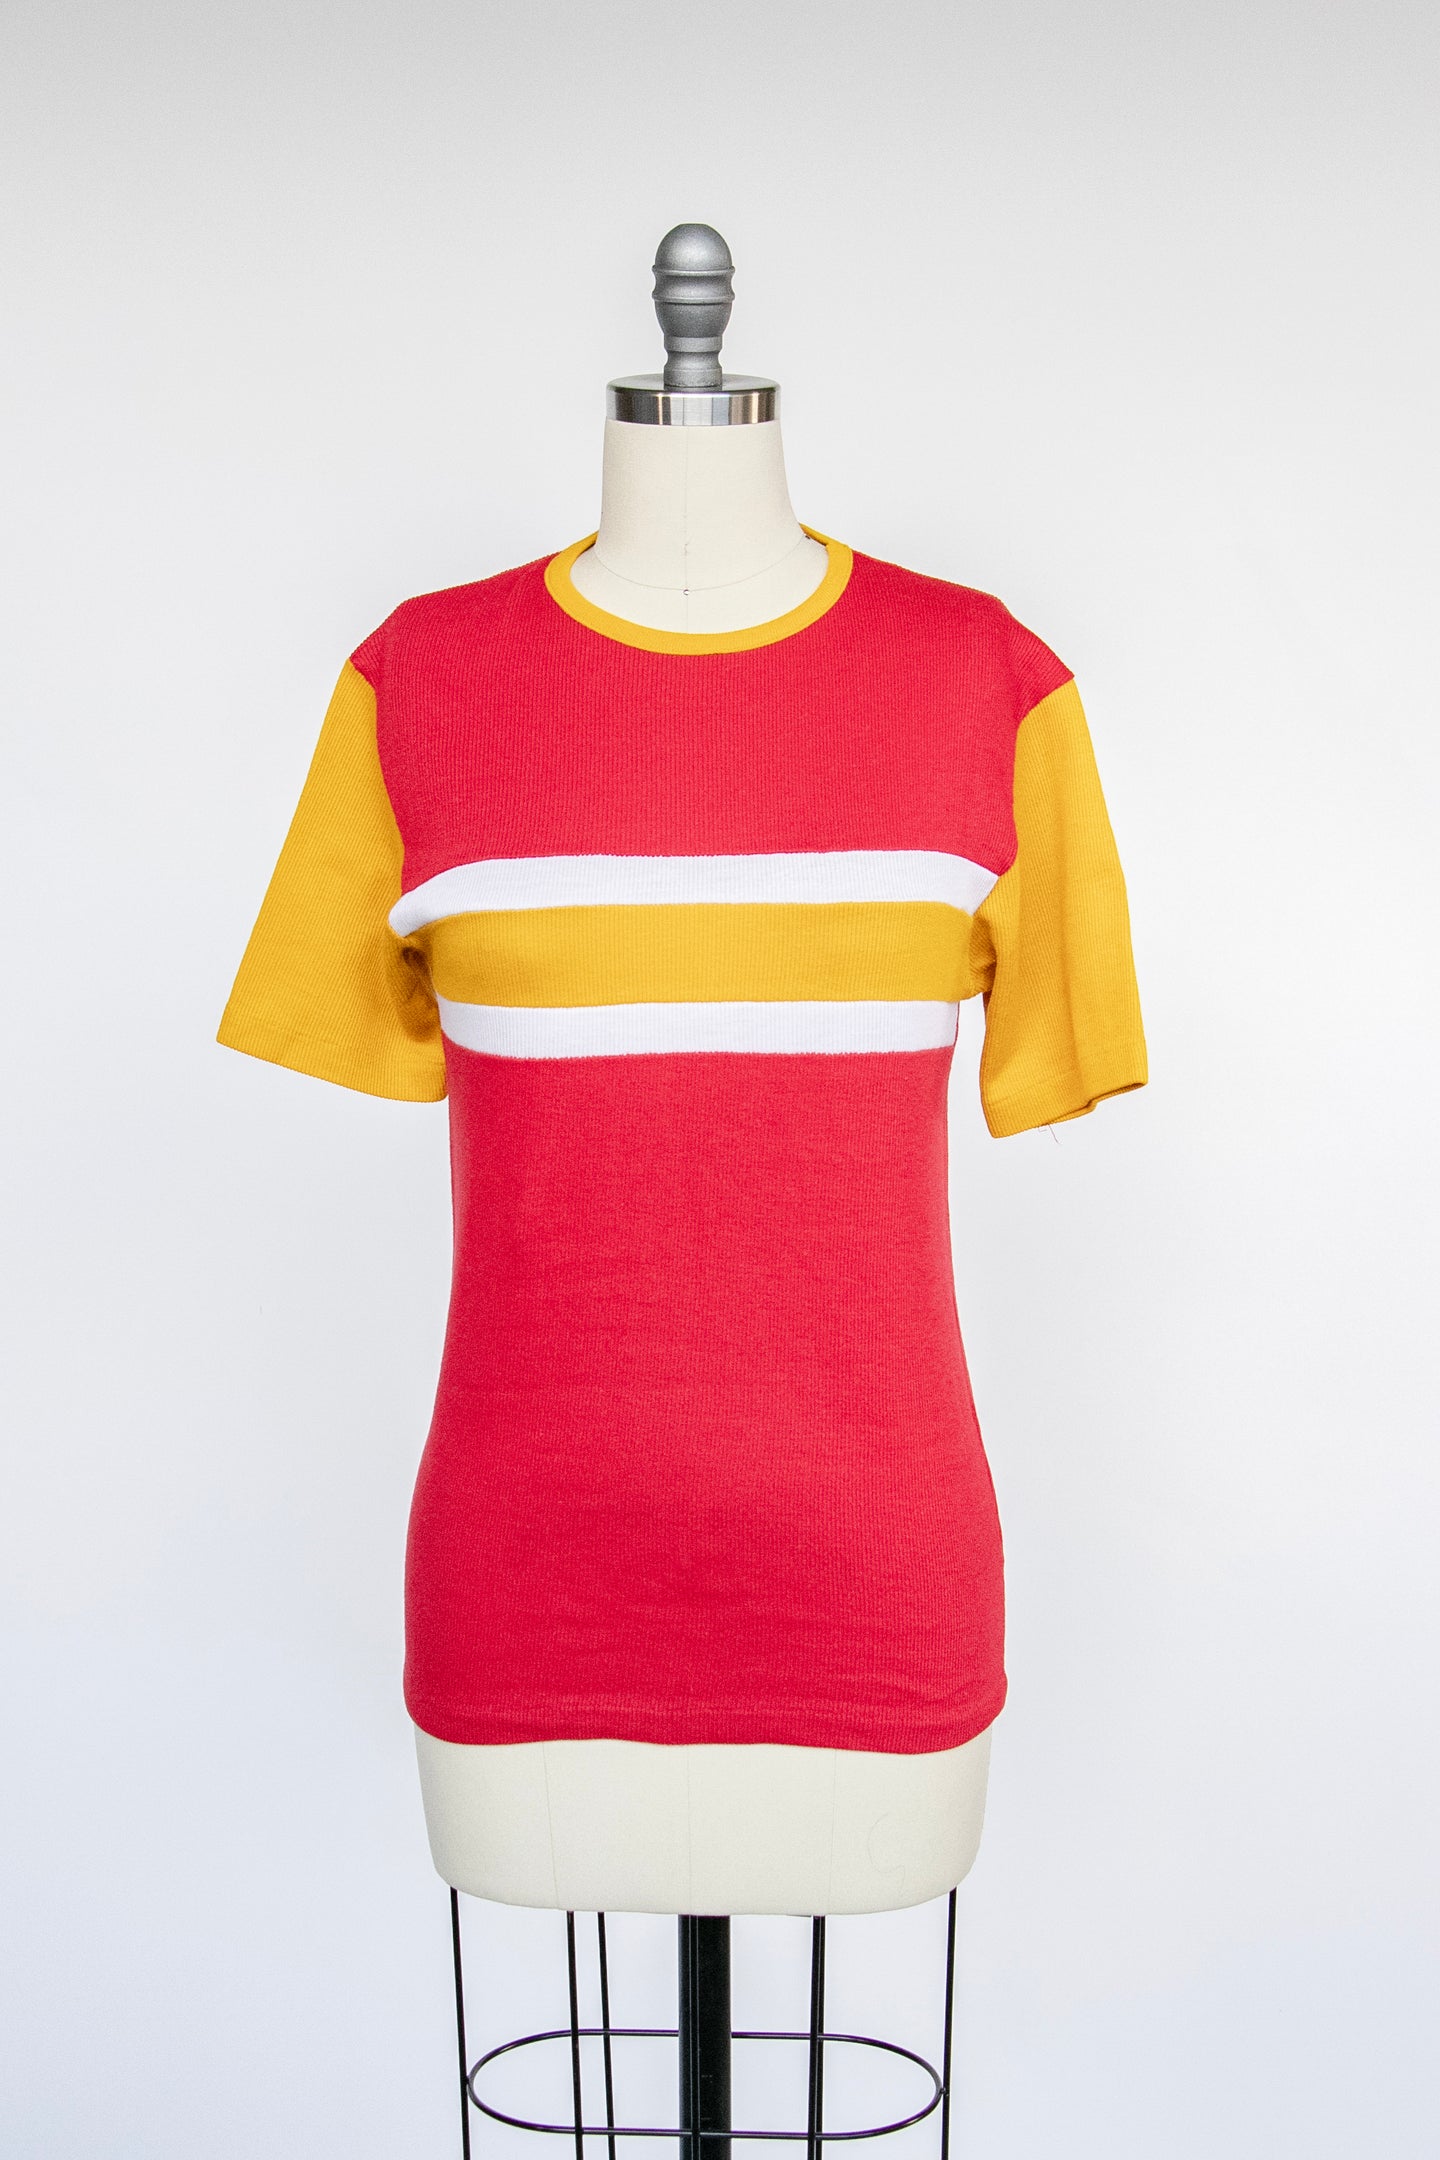 1970s T-shirt Top Striped Knit Color Block S